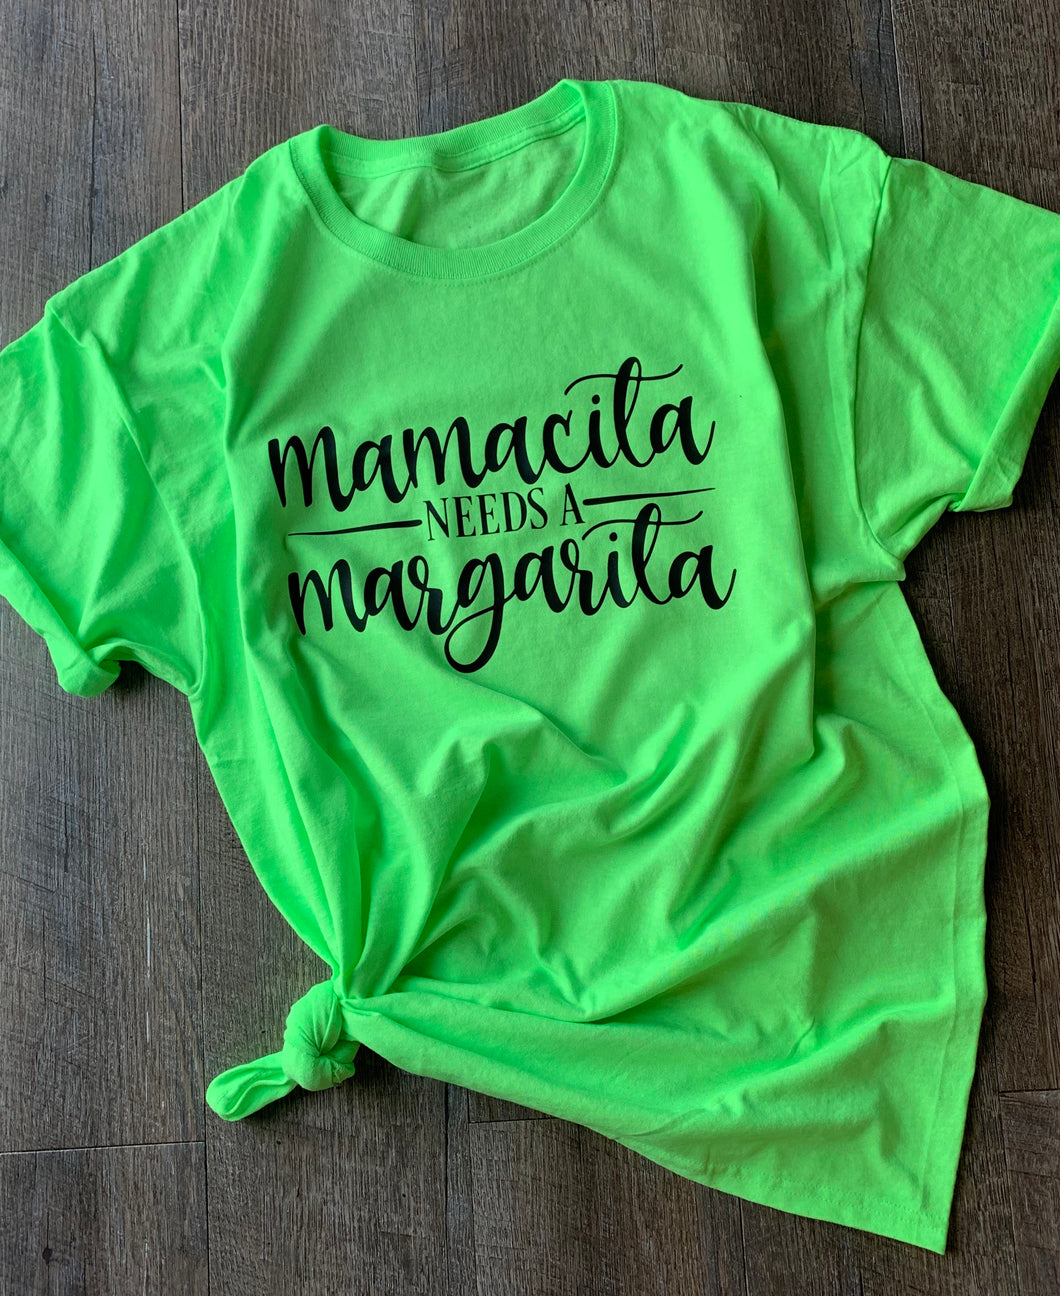 Mamacita needs a margarita. Neon green graphic tee. Perfect for summer! - Mavictoria Designs Hot Press Express